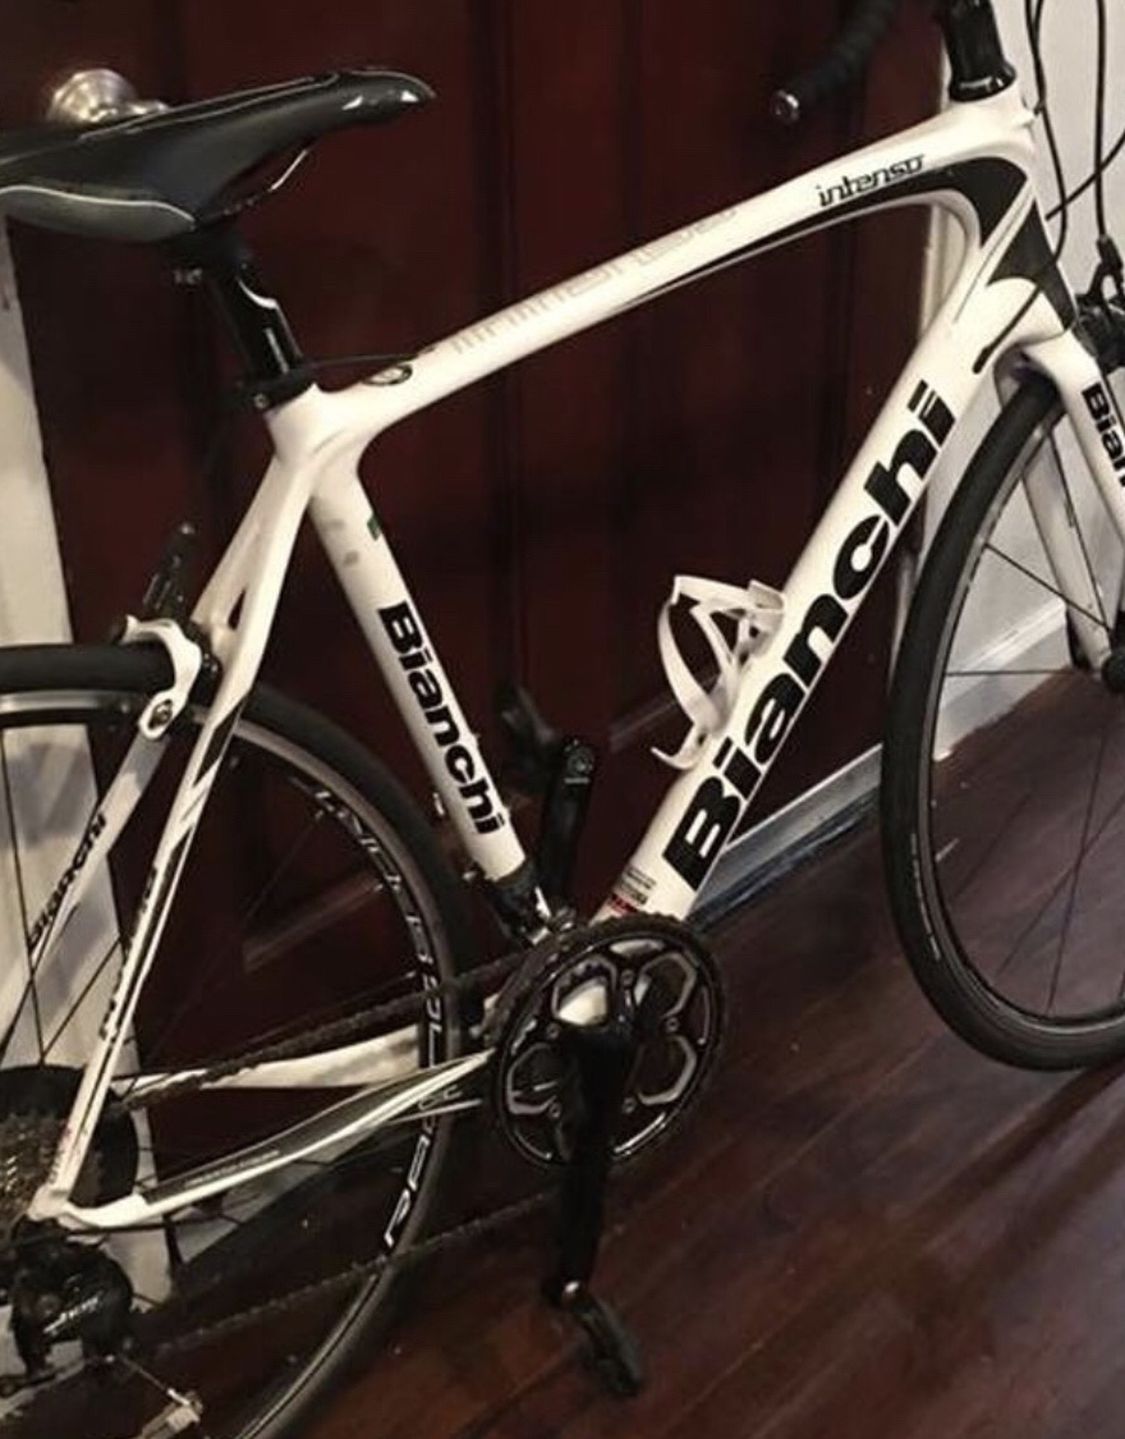 Bianchi full carbon road bike